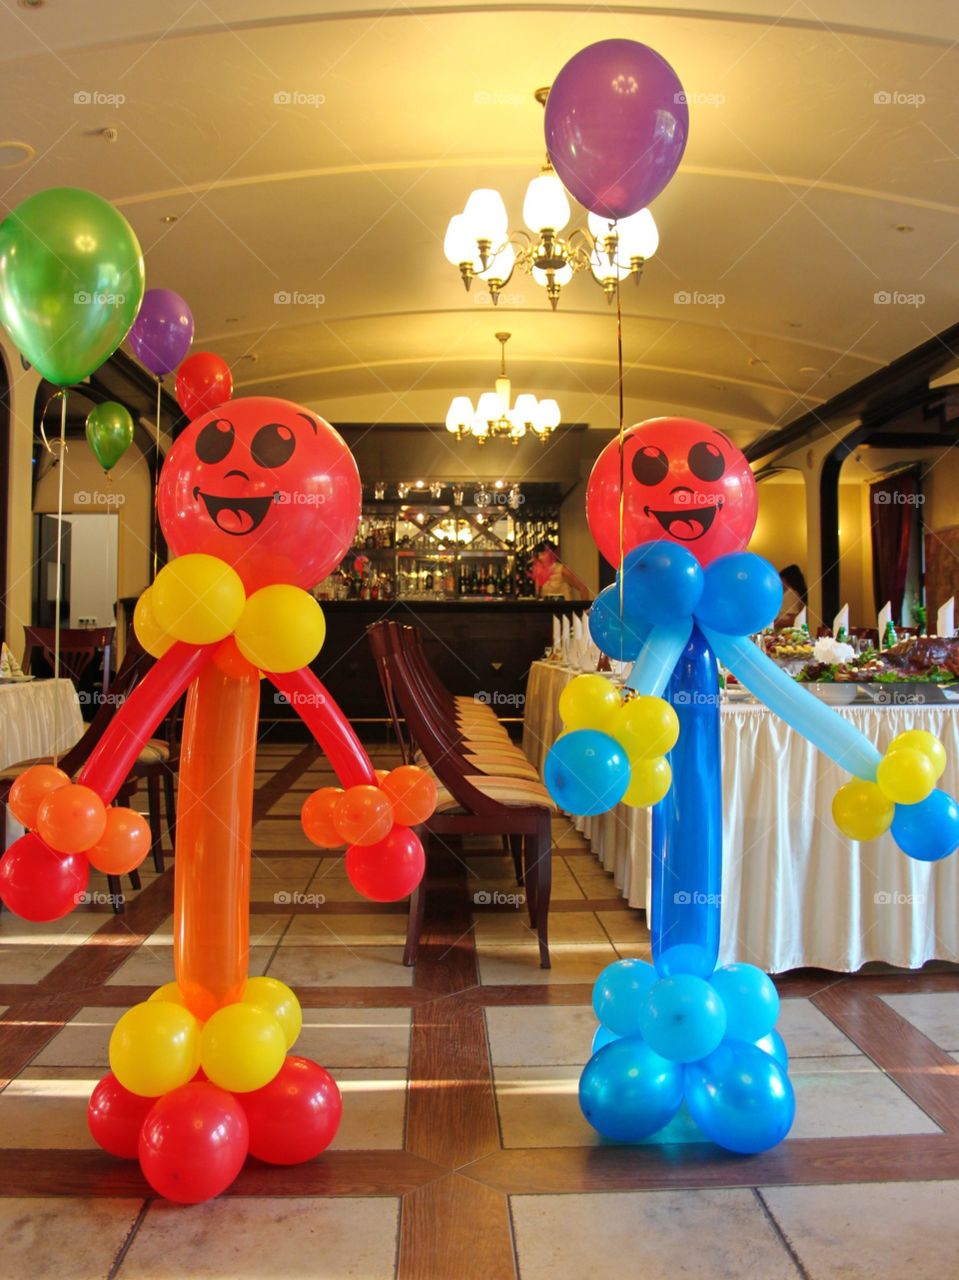 Balloons decoration on celebration. Happy smile balloons on celebration